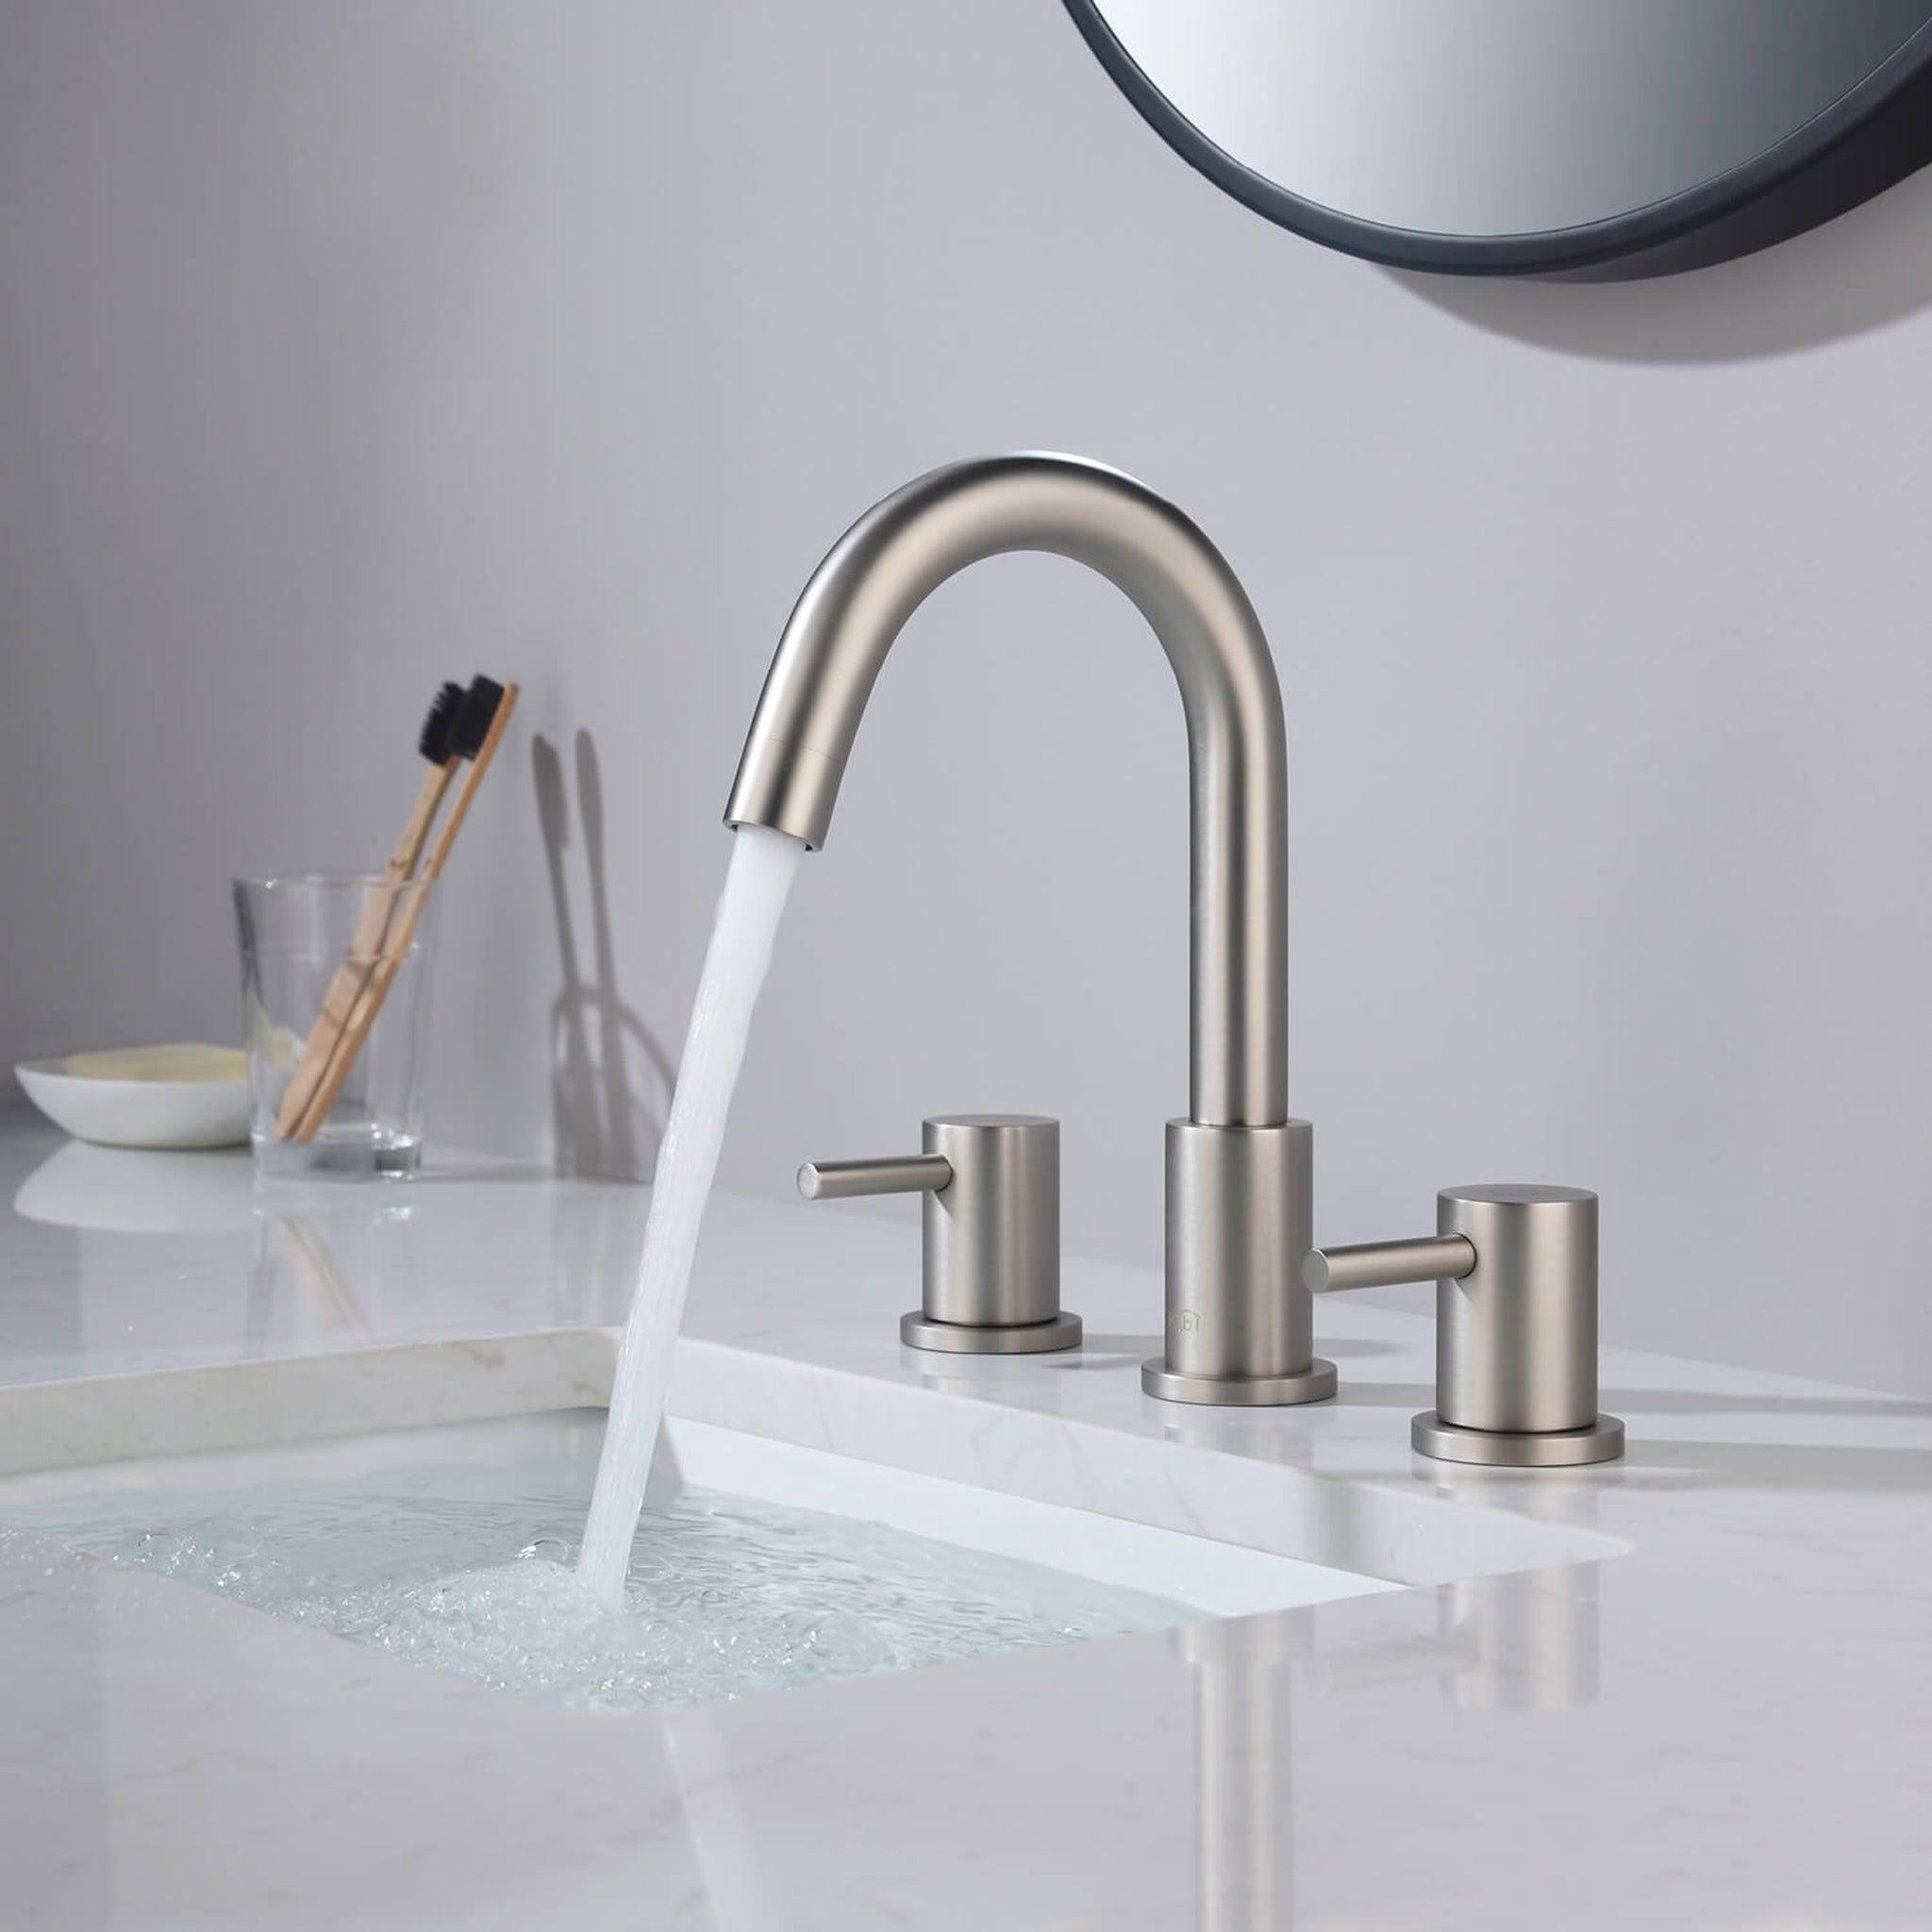 KIBI, KIBI Circular 8" Widespread 2-Handle Brushed Nickel Solid Brass Bathroom Sink Faucet With Pop-Up Drain